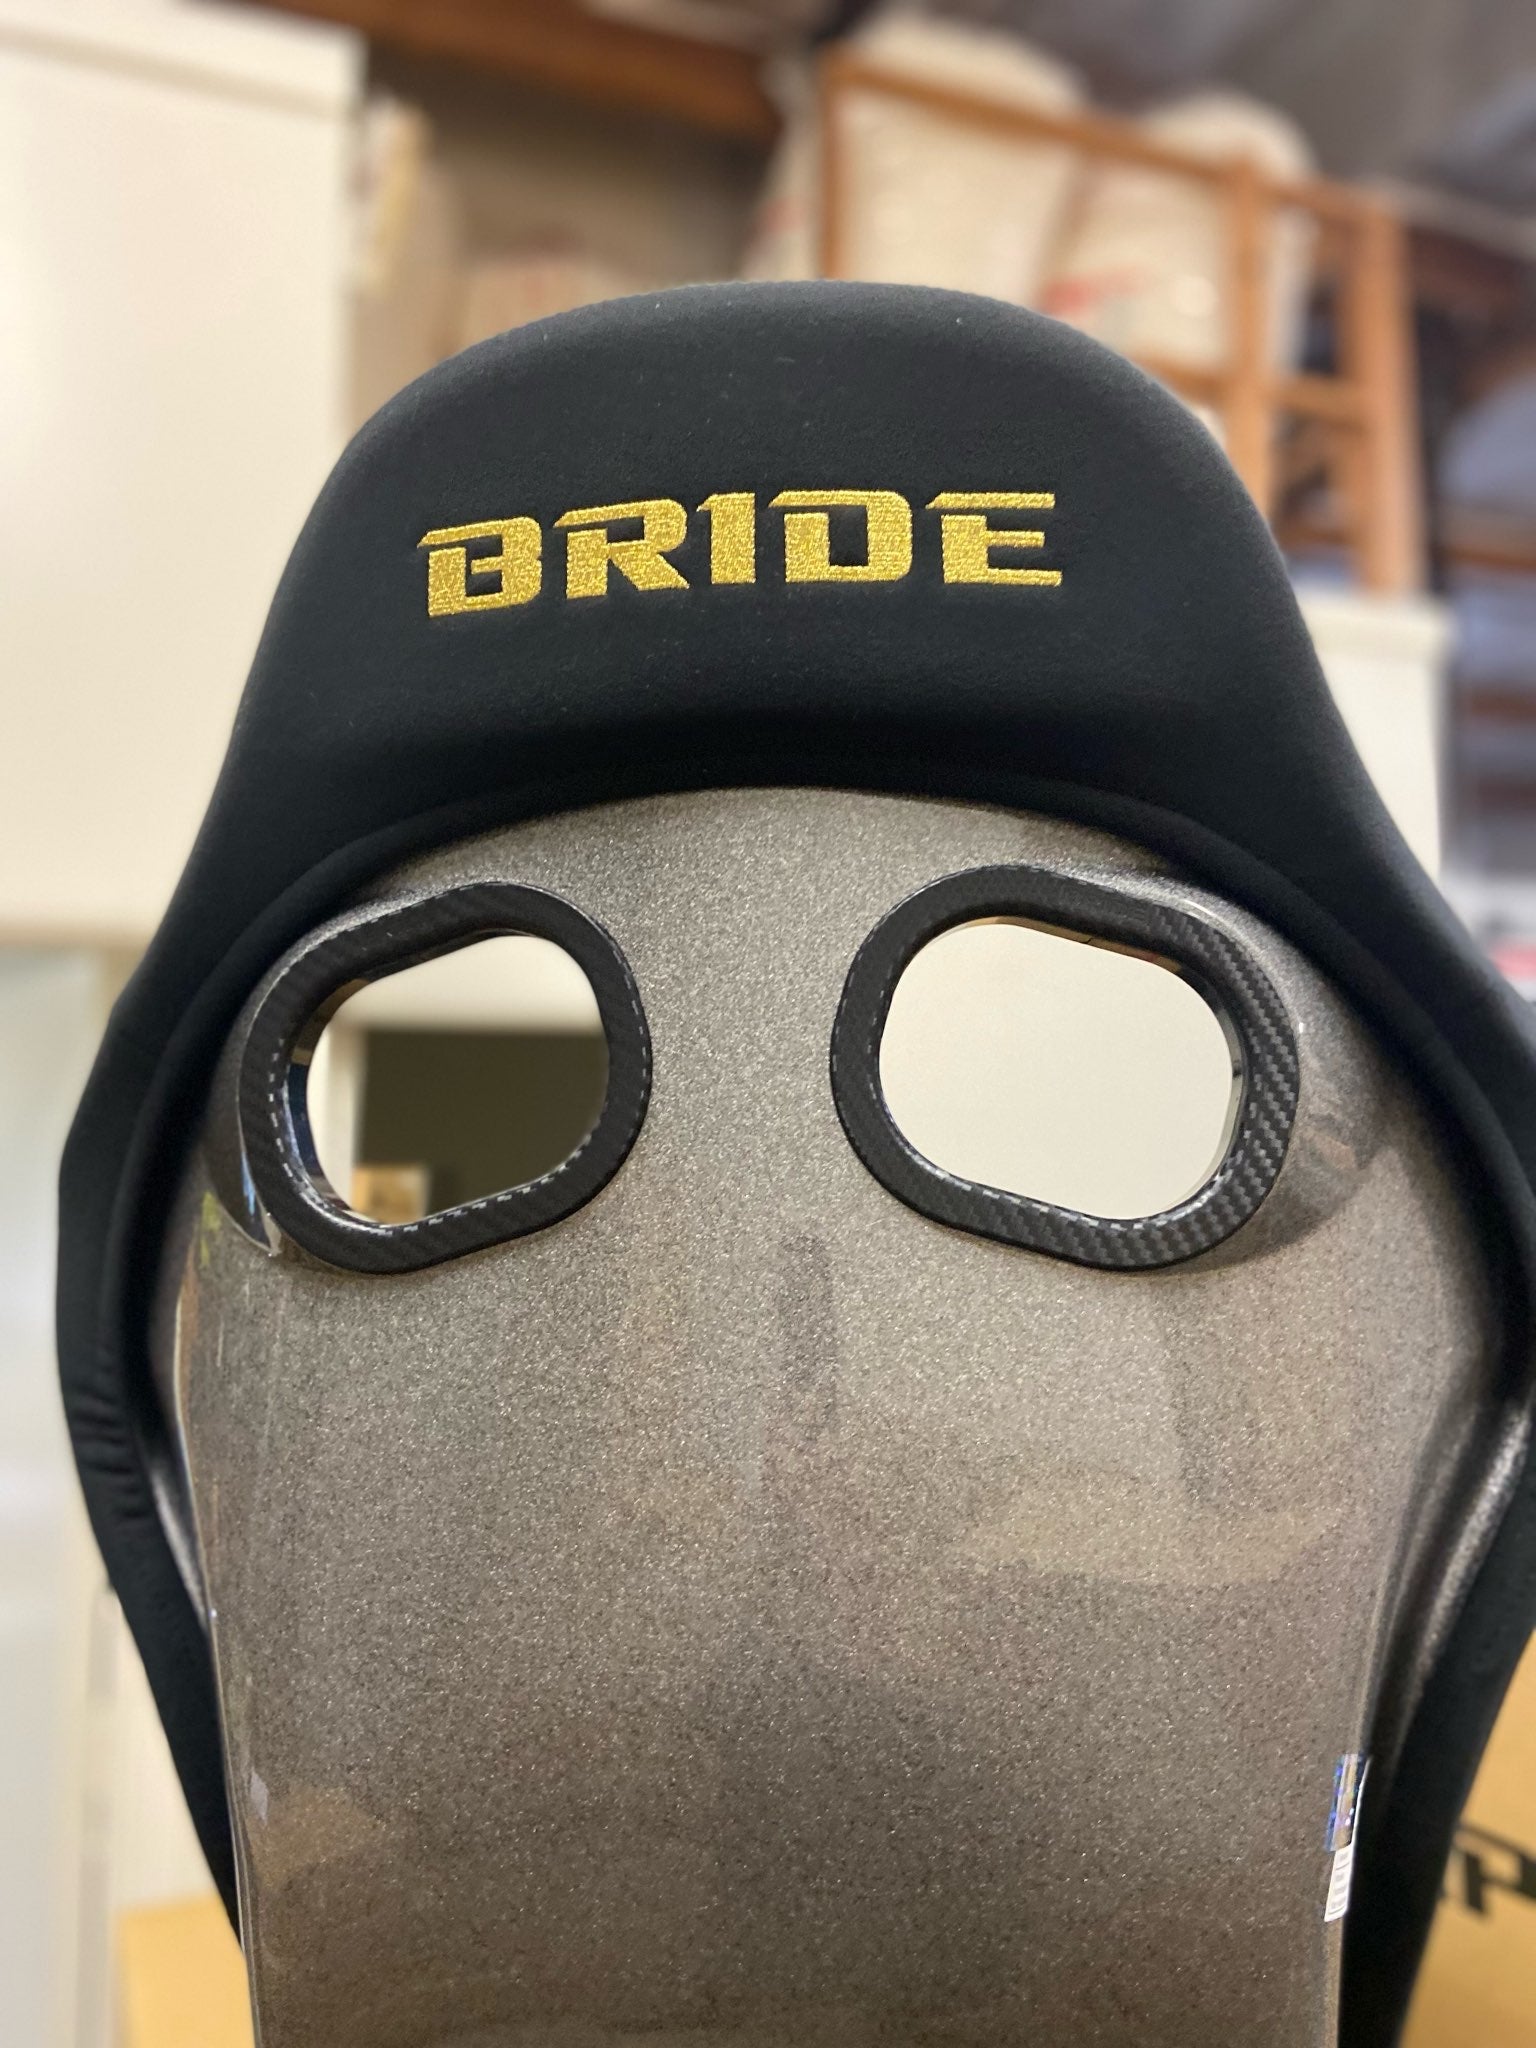 Bride Gold Stitching Seat